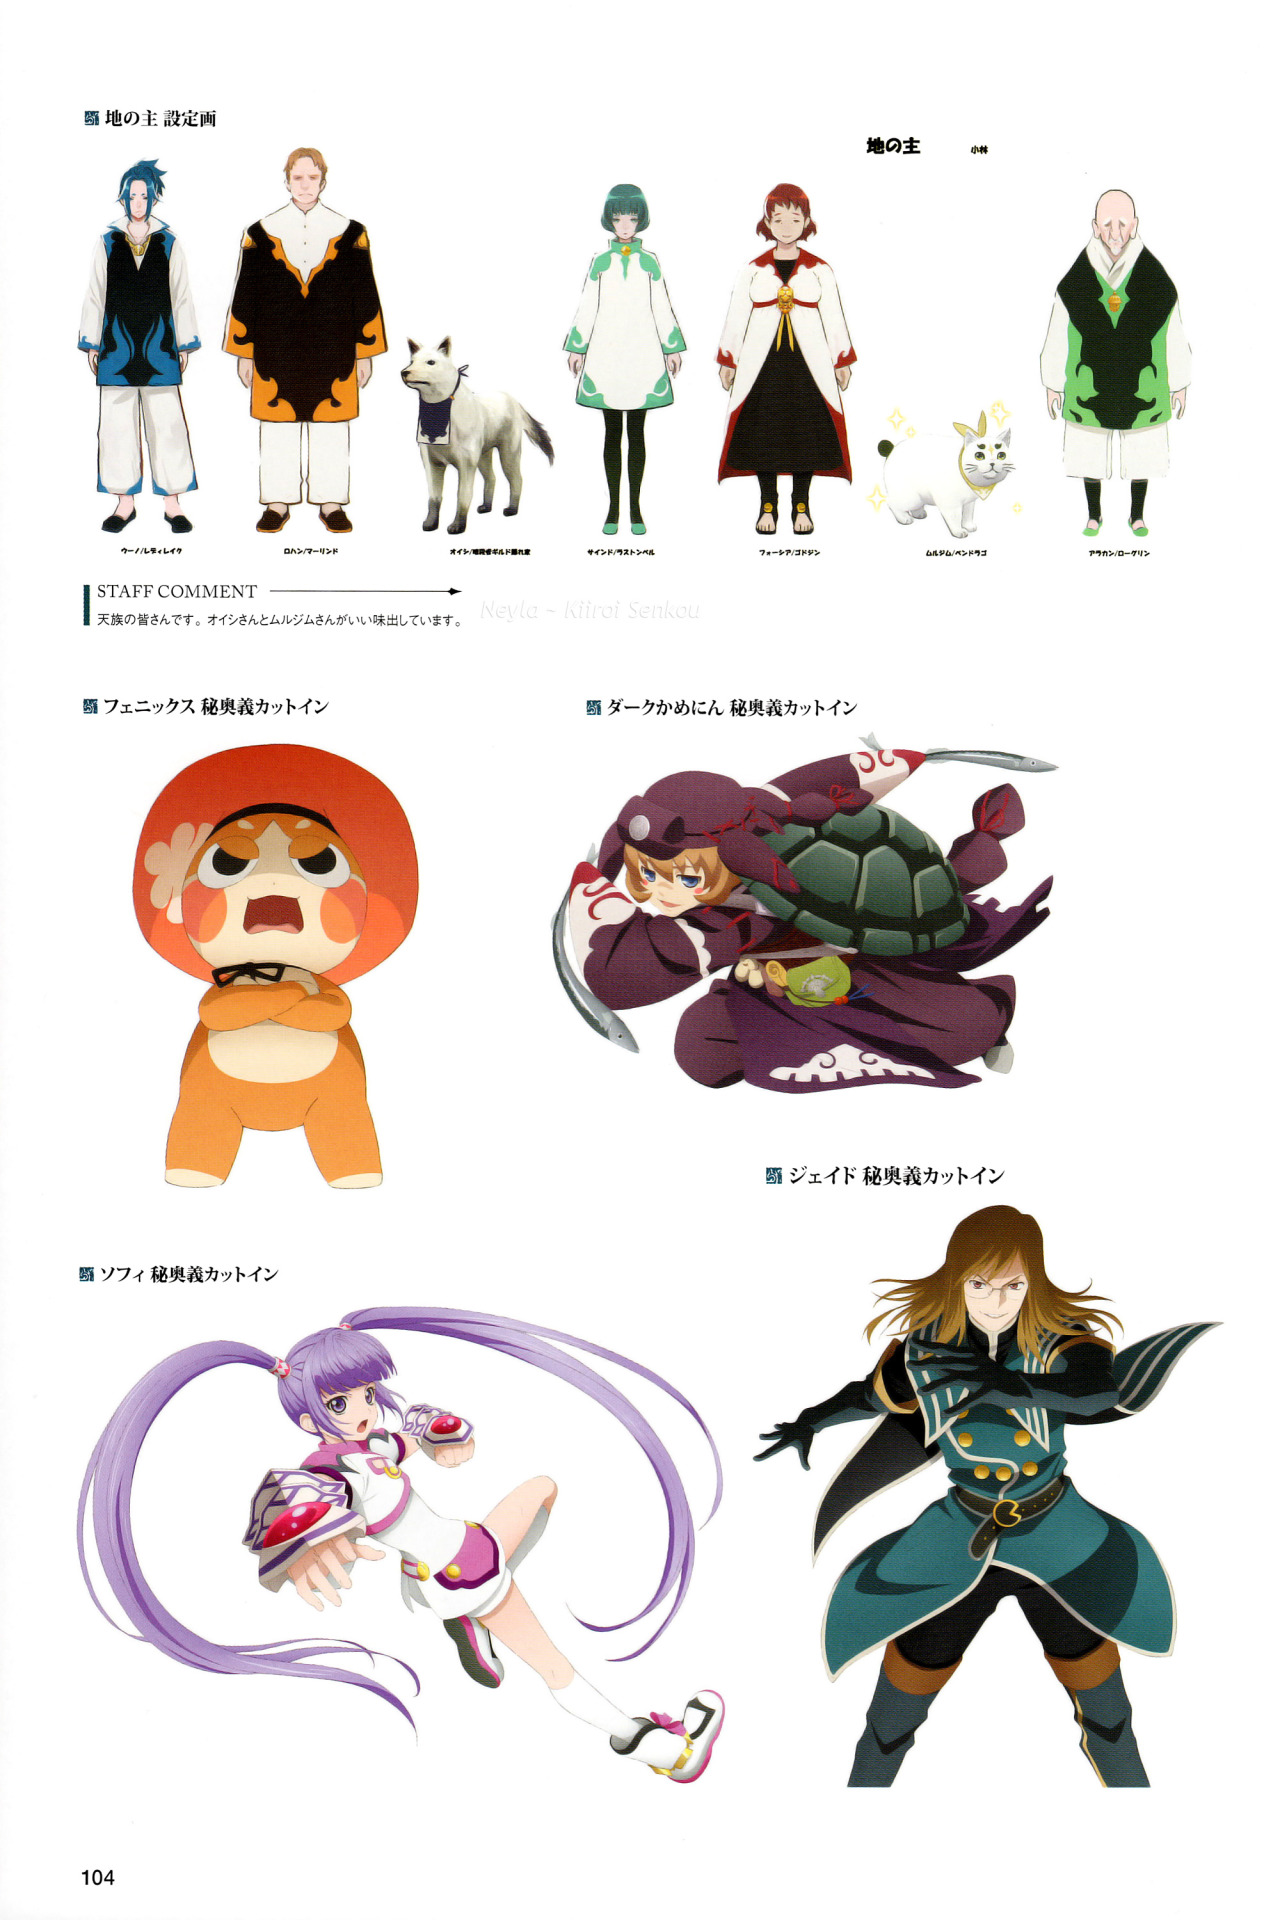 USED) Doujinshi - Tales of Zestiria / All Characters & All Characters ( Zestiria) (オレイロ) / Yacchuu Panda